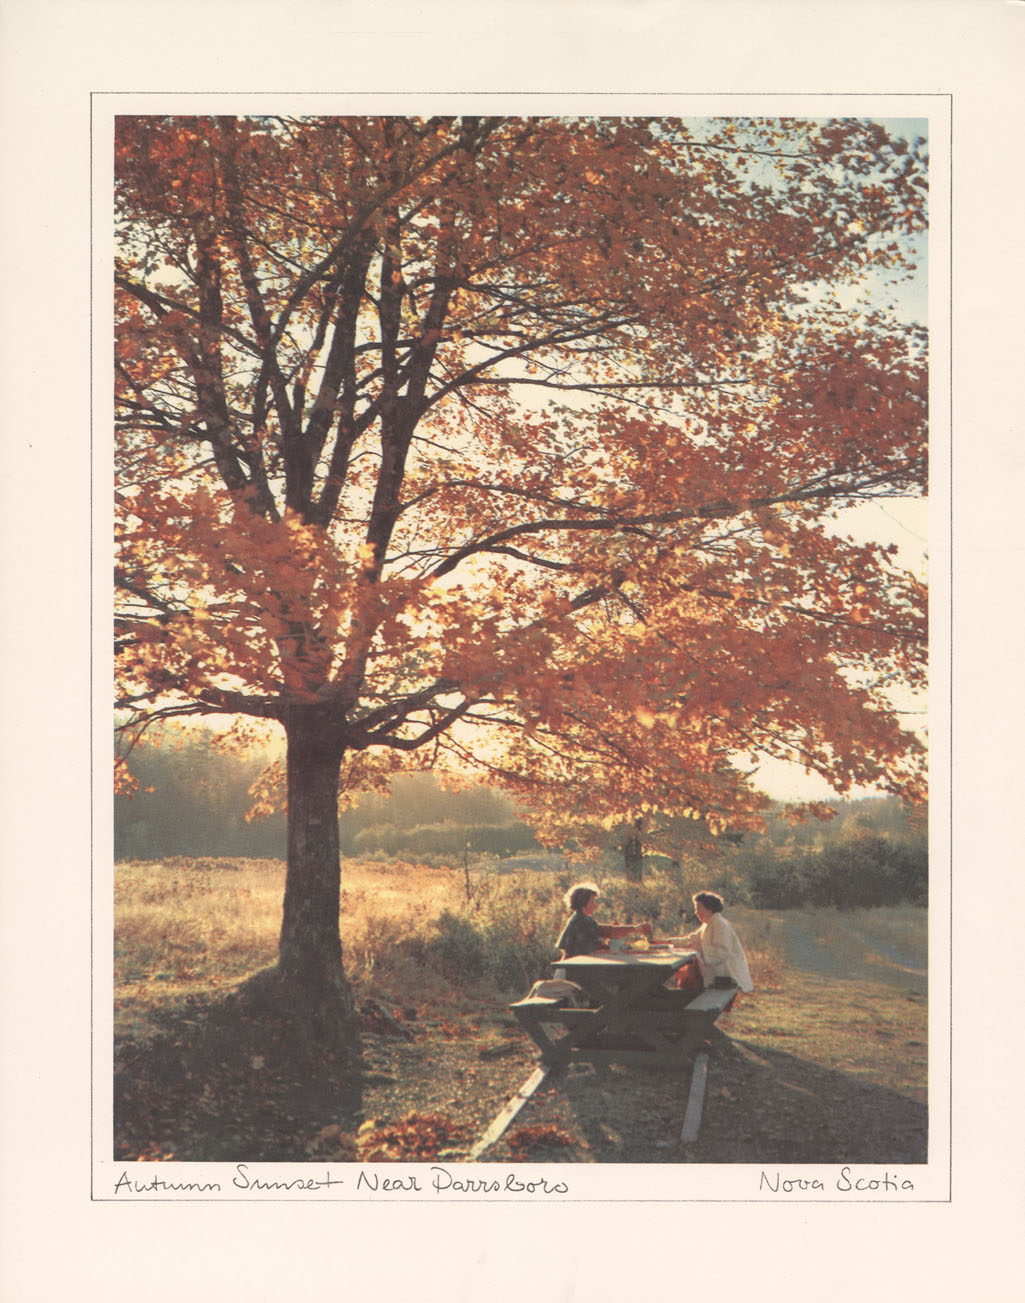 Book Jackets, Advertisements, and Art Reproductions: Atlantic Pavillion Photos of NS (from expo '67): Autumn Sunset near Parrsboro